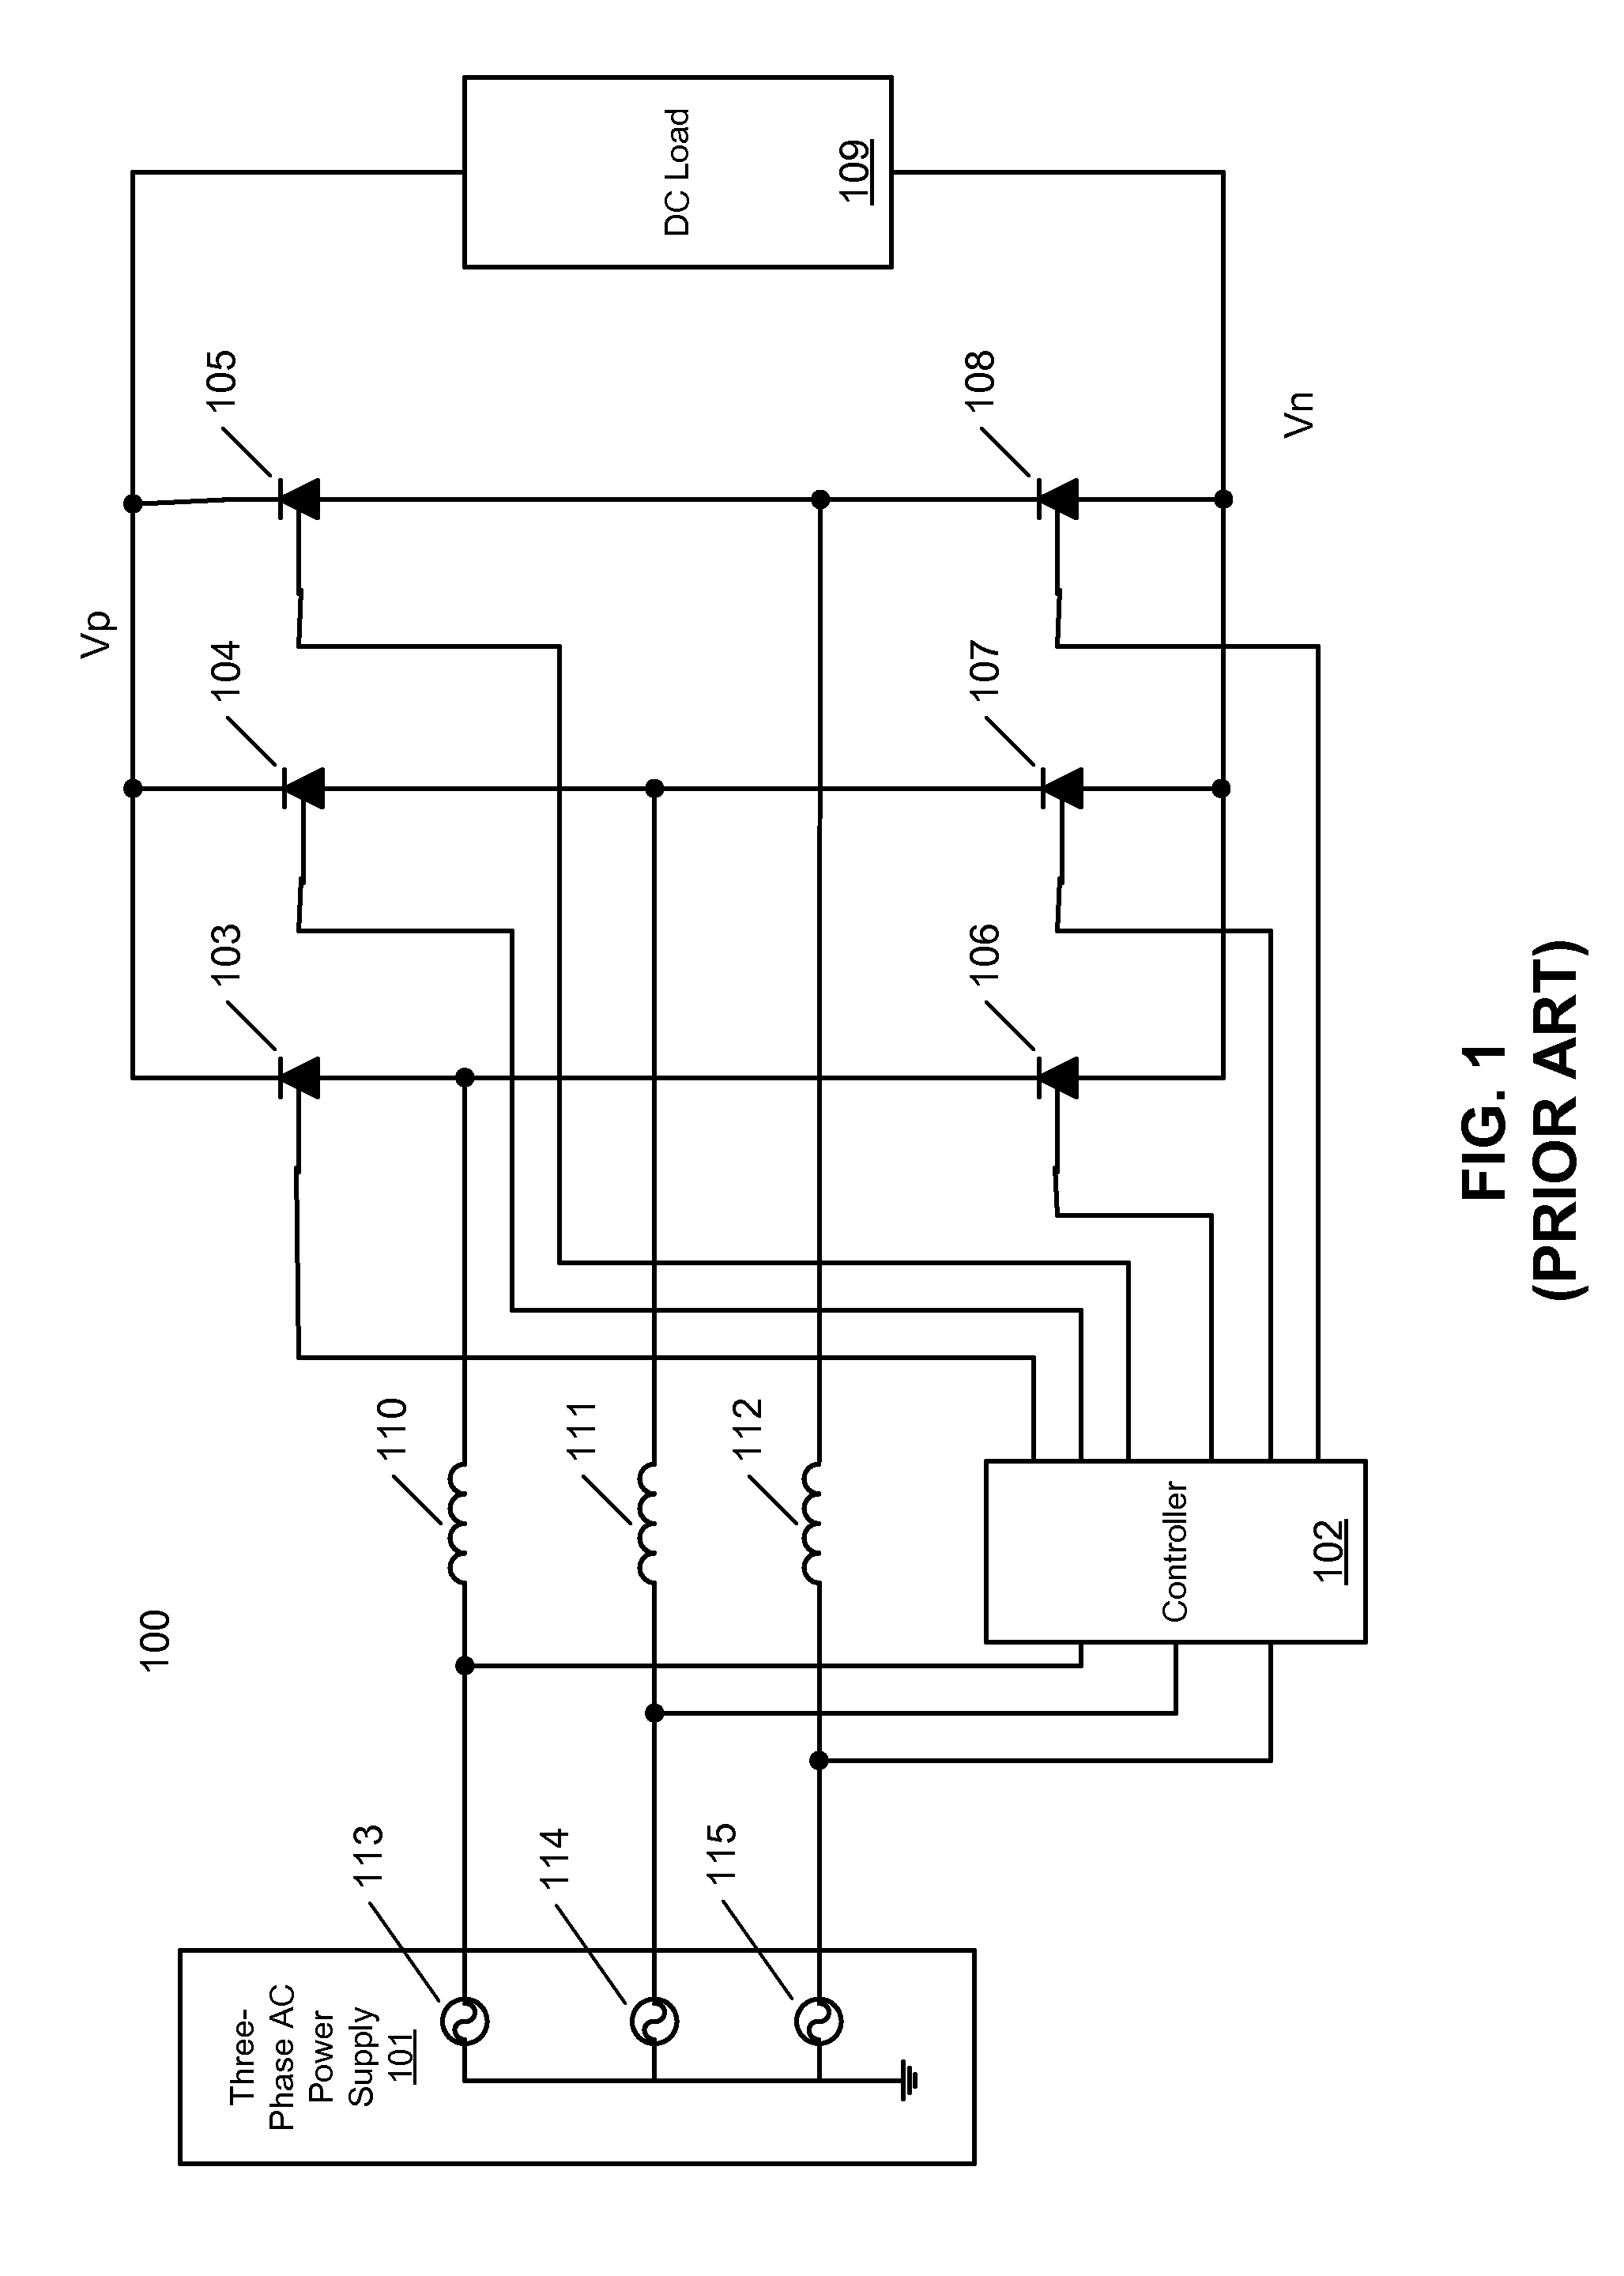 Power conversion circuits